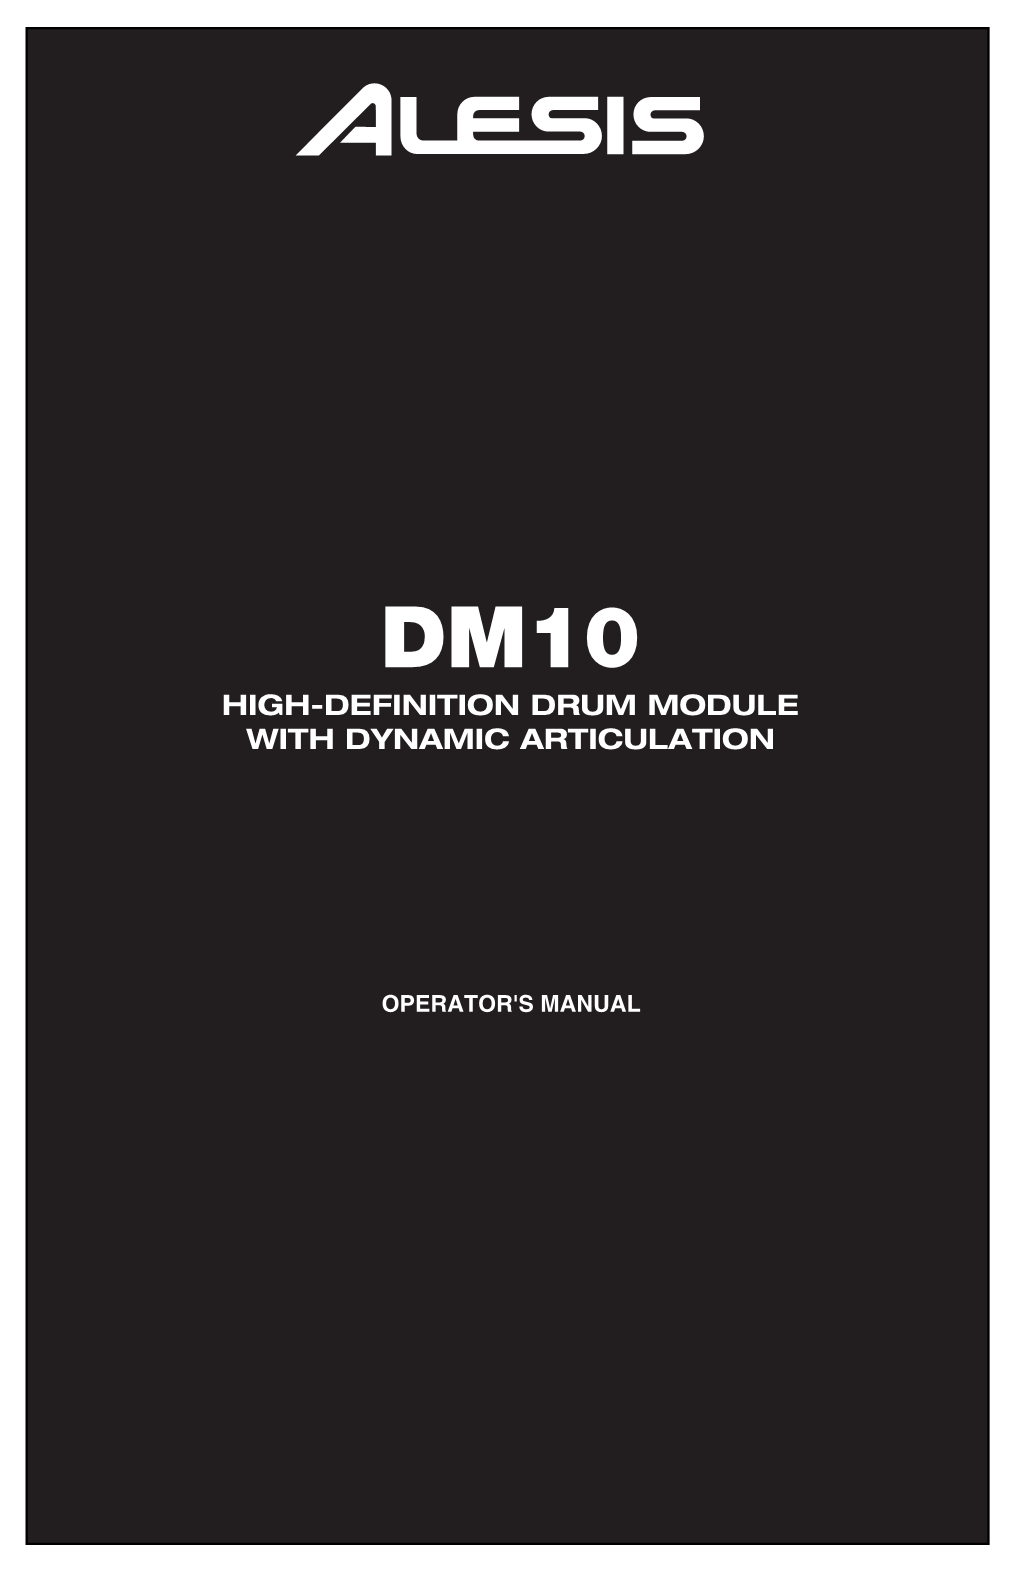 Dm10 High-Definition Drum Module with Dynamic Articulation